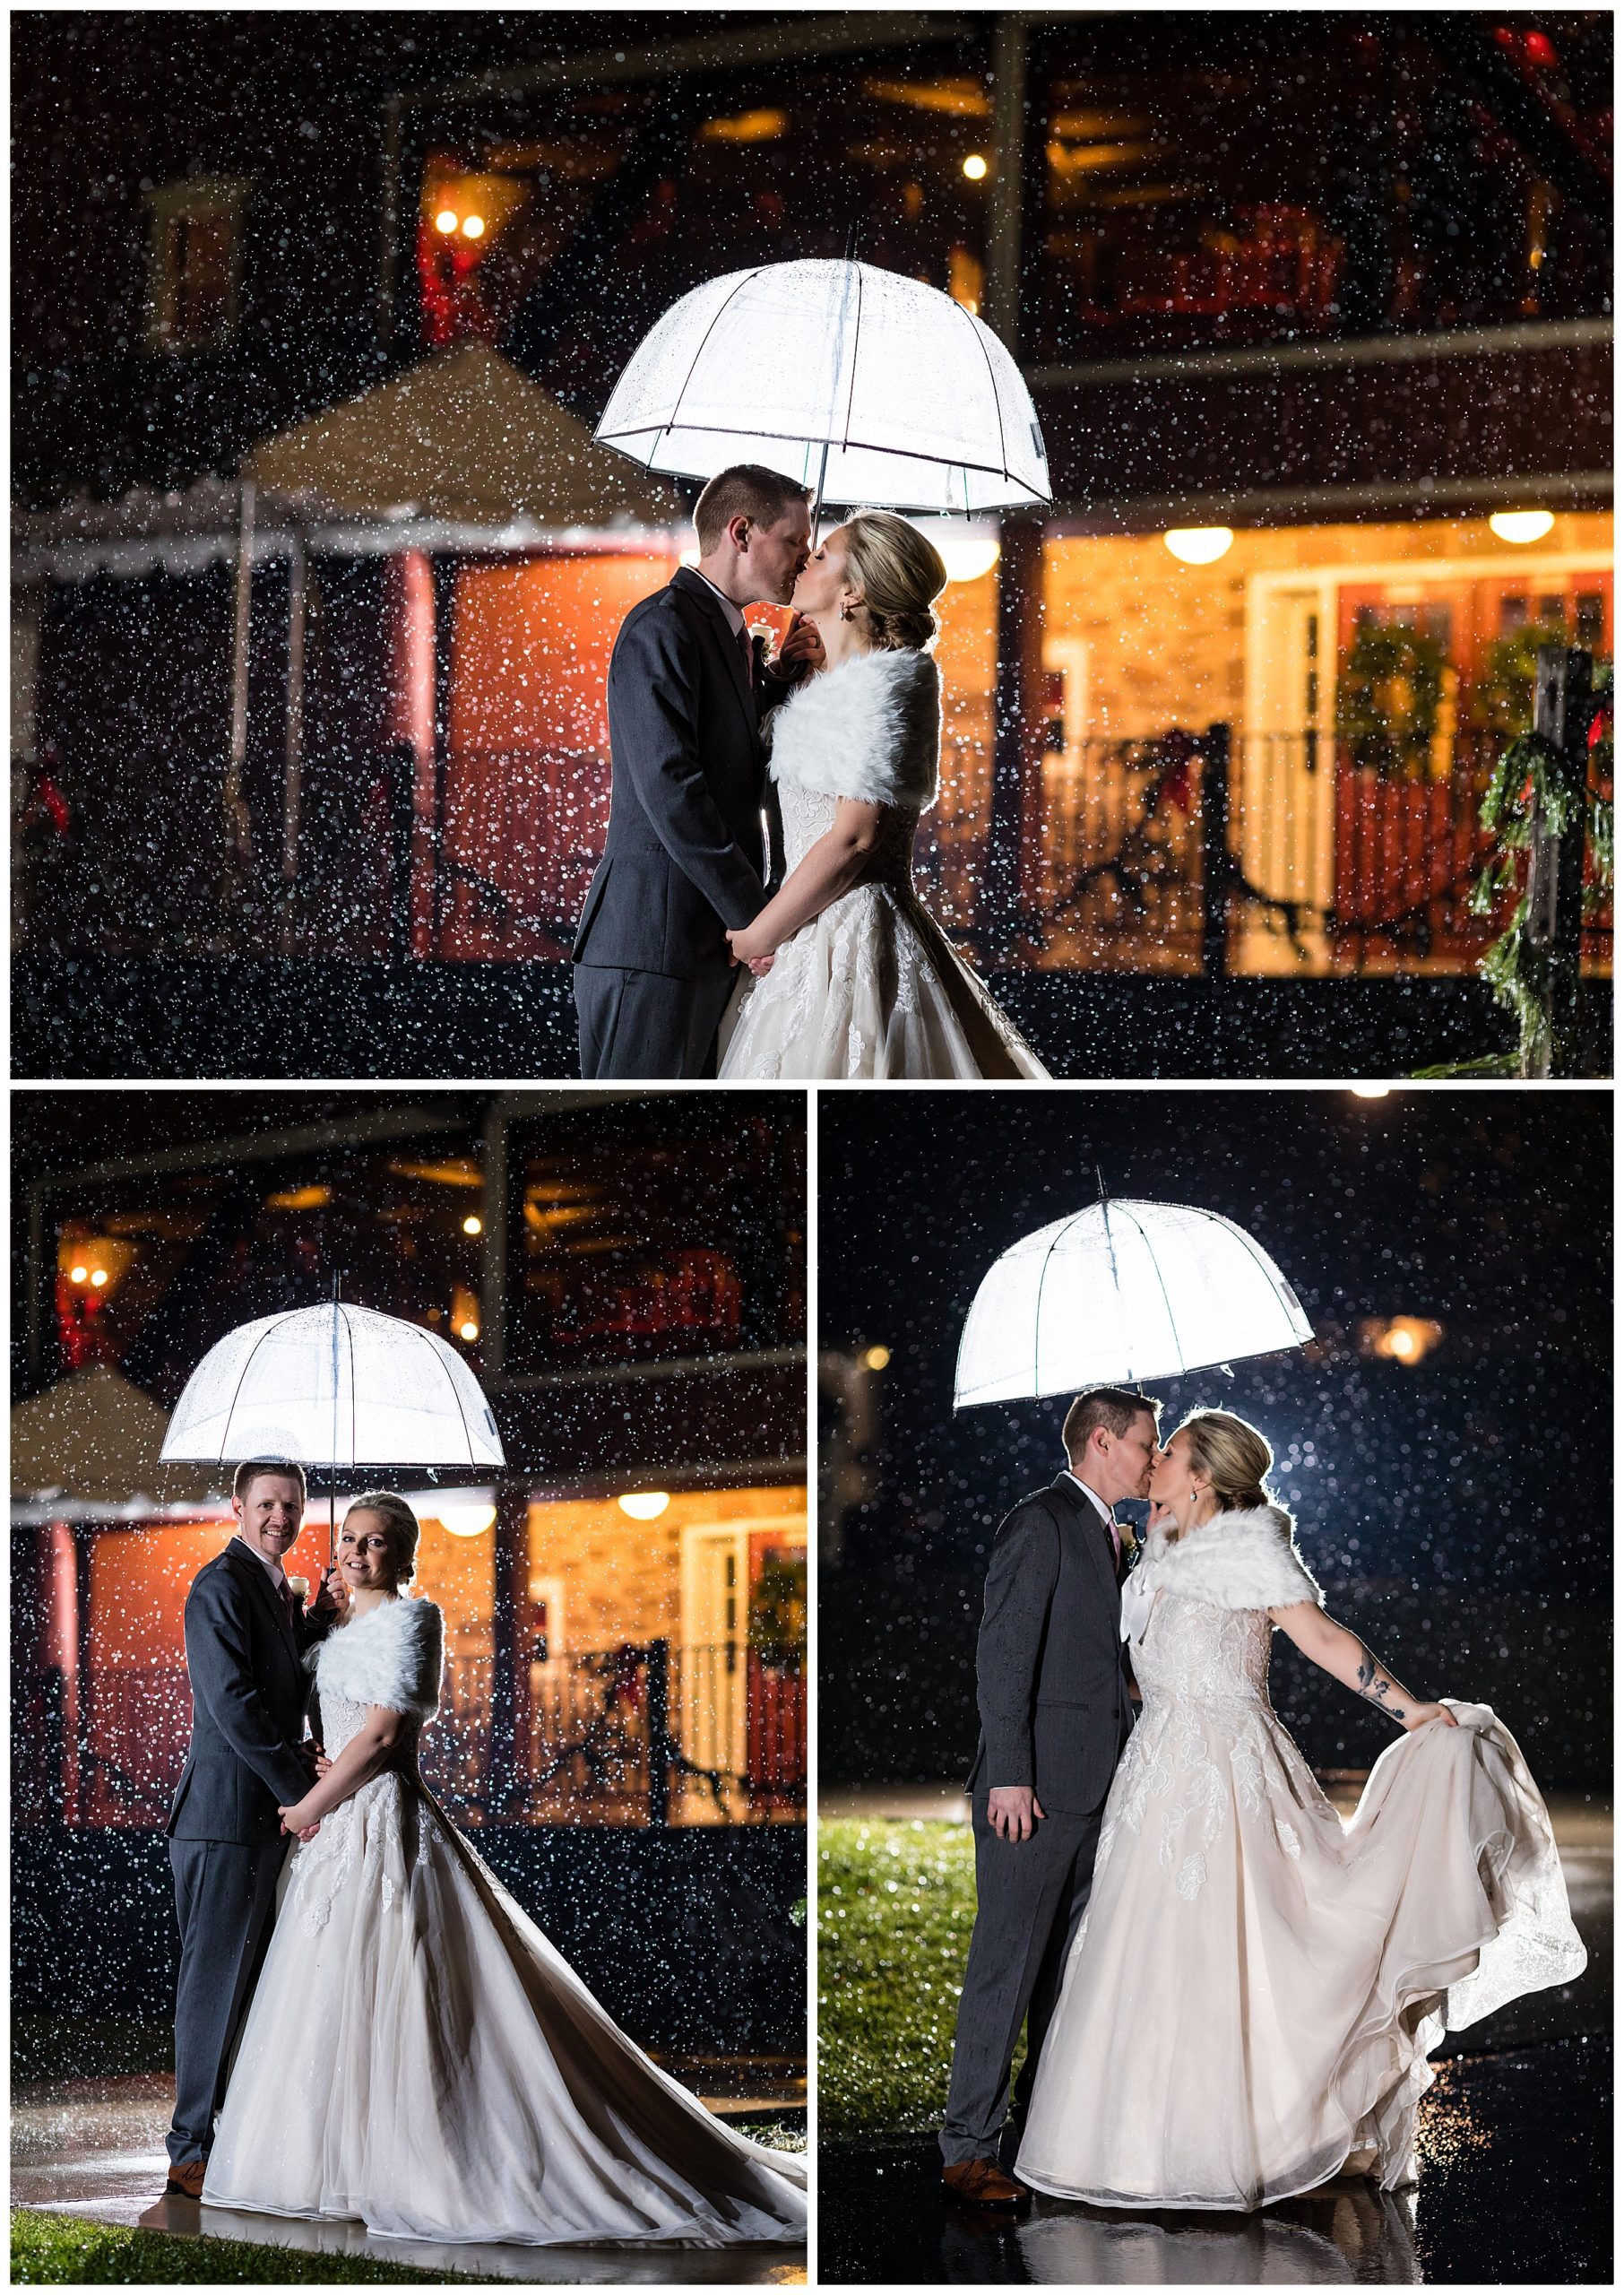 Bride and groom kiss under umbrella in snowy winter wedding at Barn on Bridge